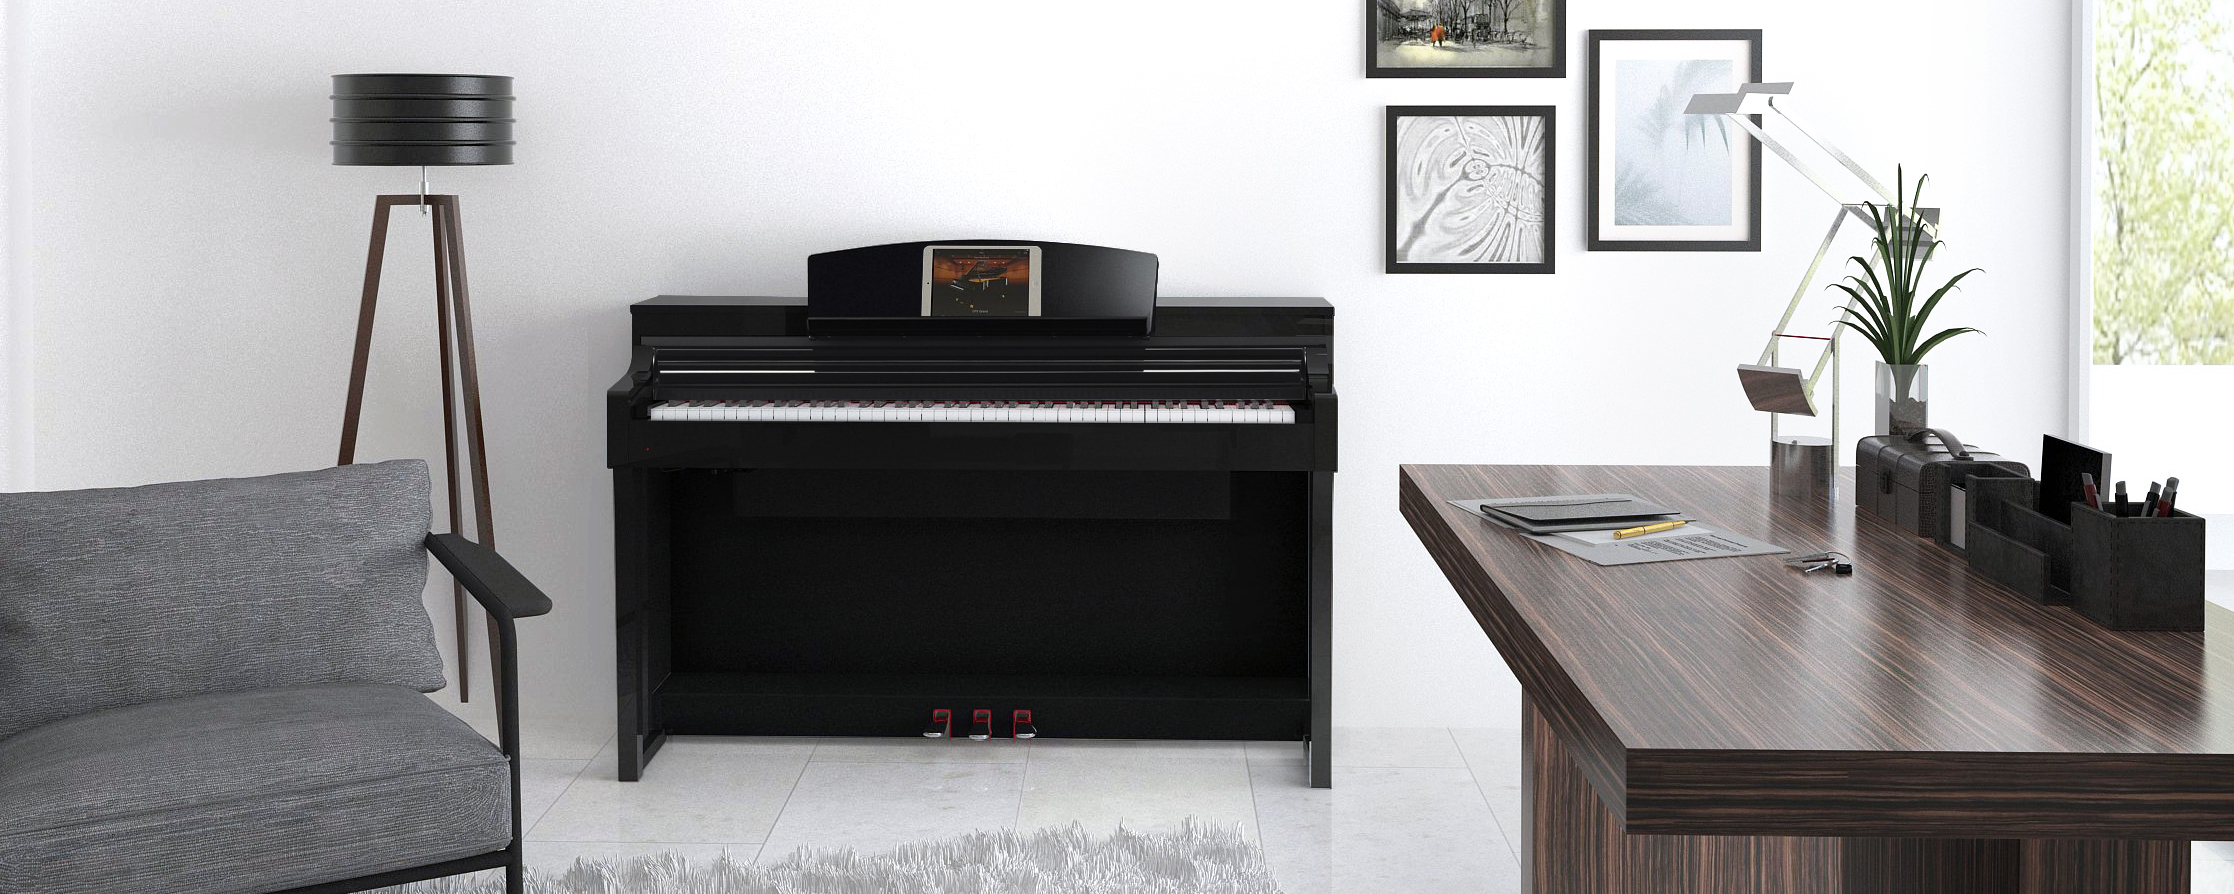 Yamaha Csp-150 - Black - Digital piano with stand - Variation 2